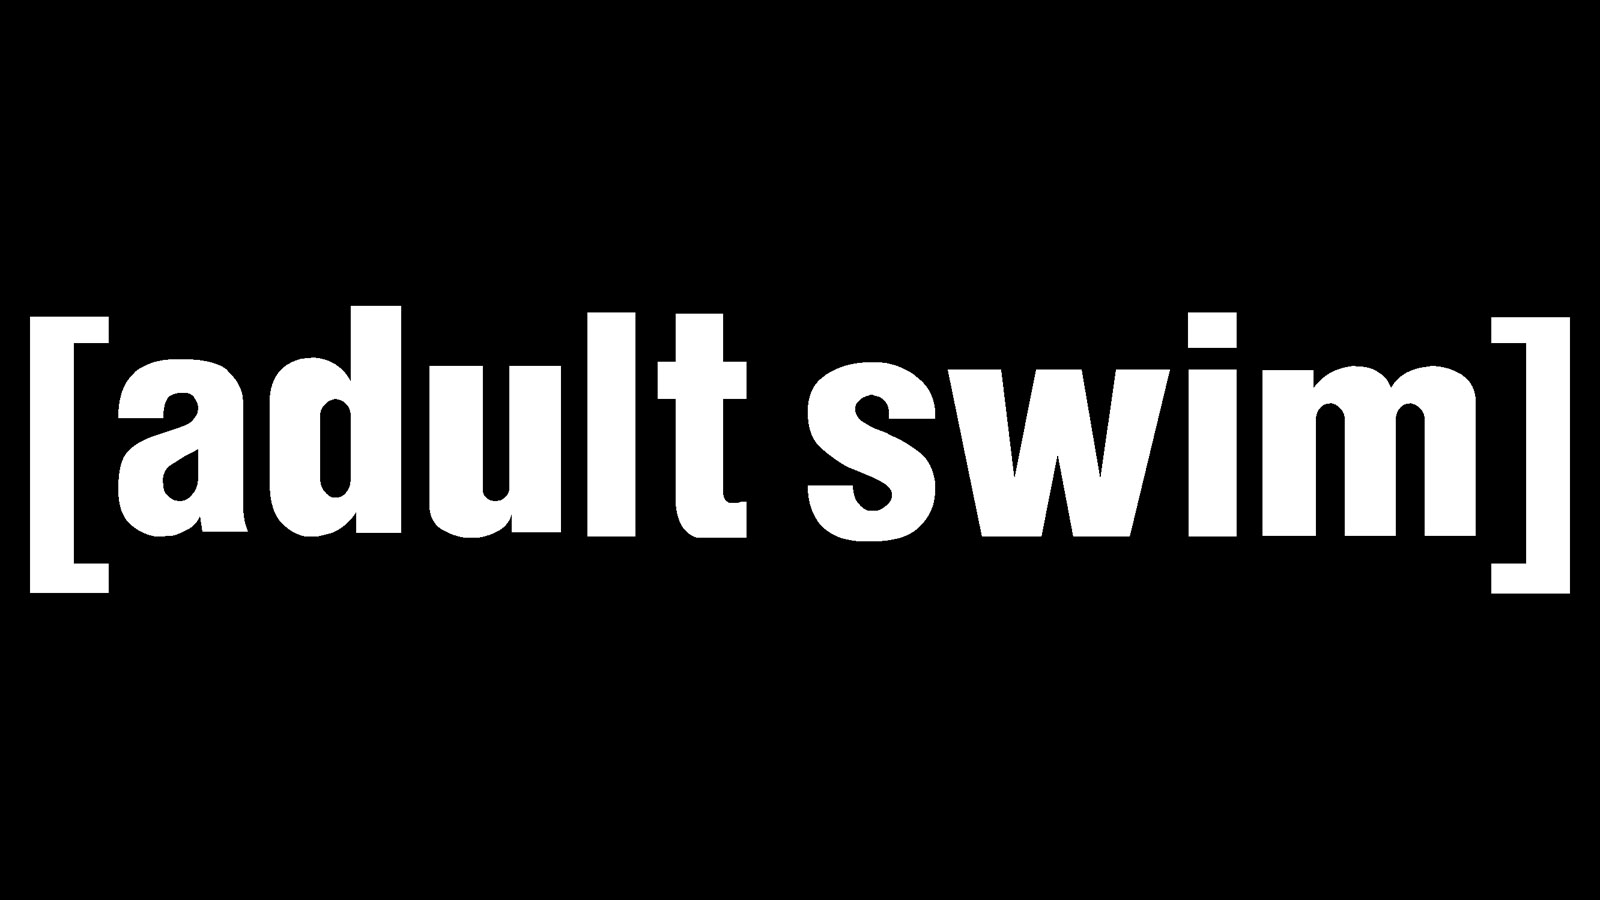 Adultswim Logo 113